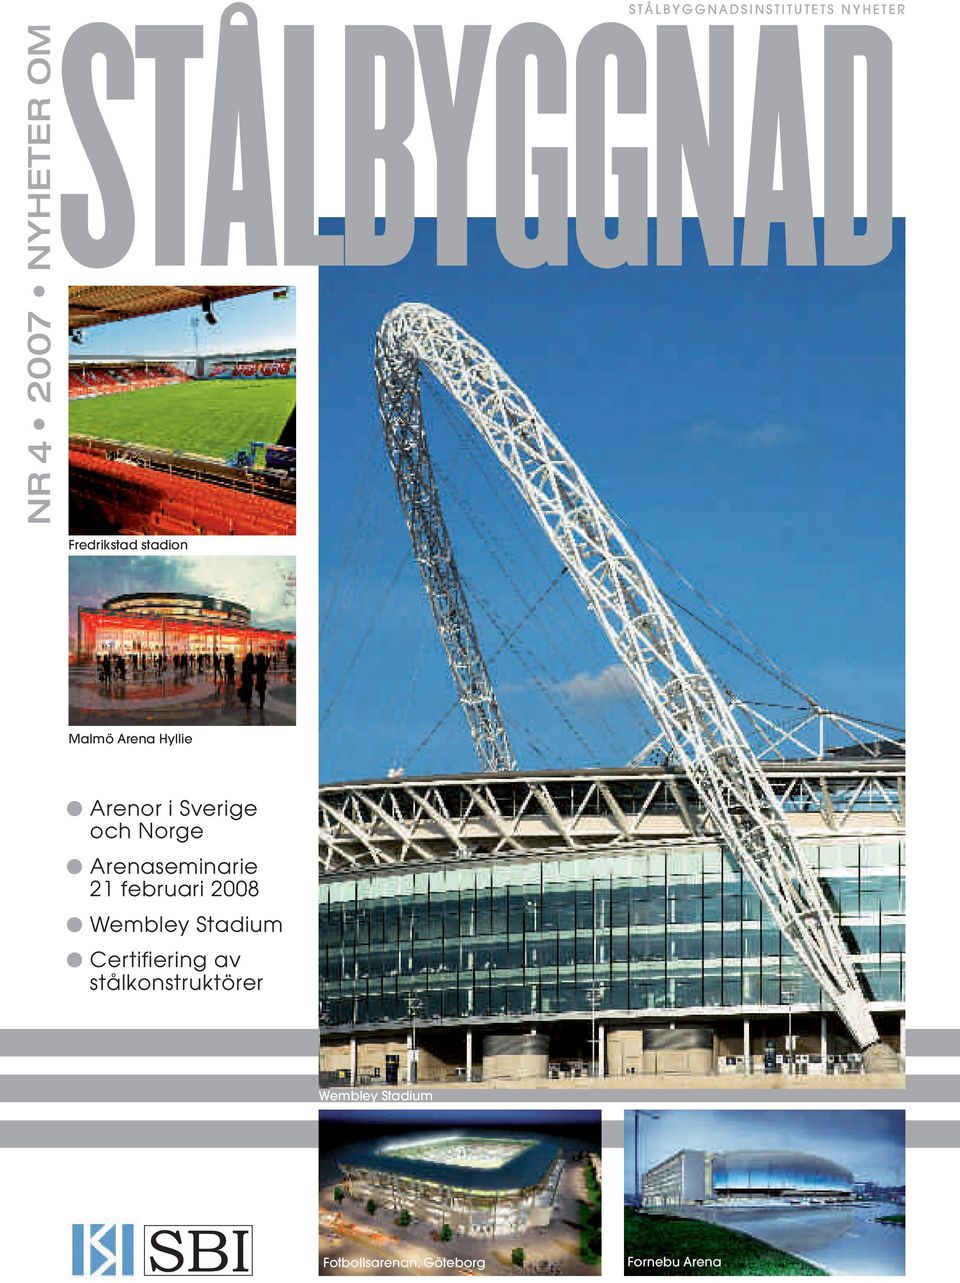 februari 2008 Wembley Stadium Certifiering av